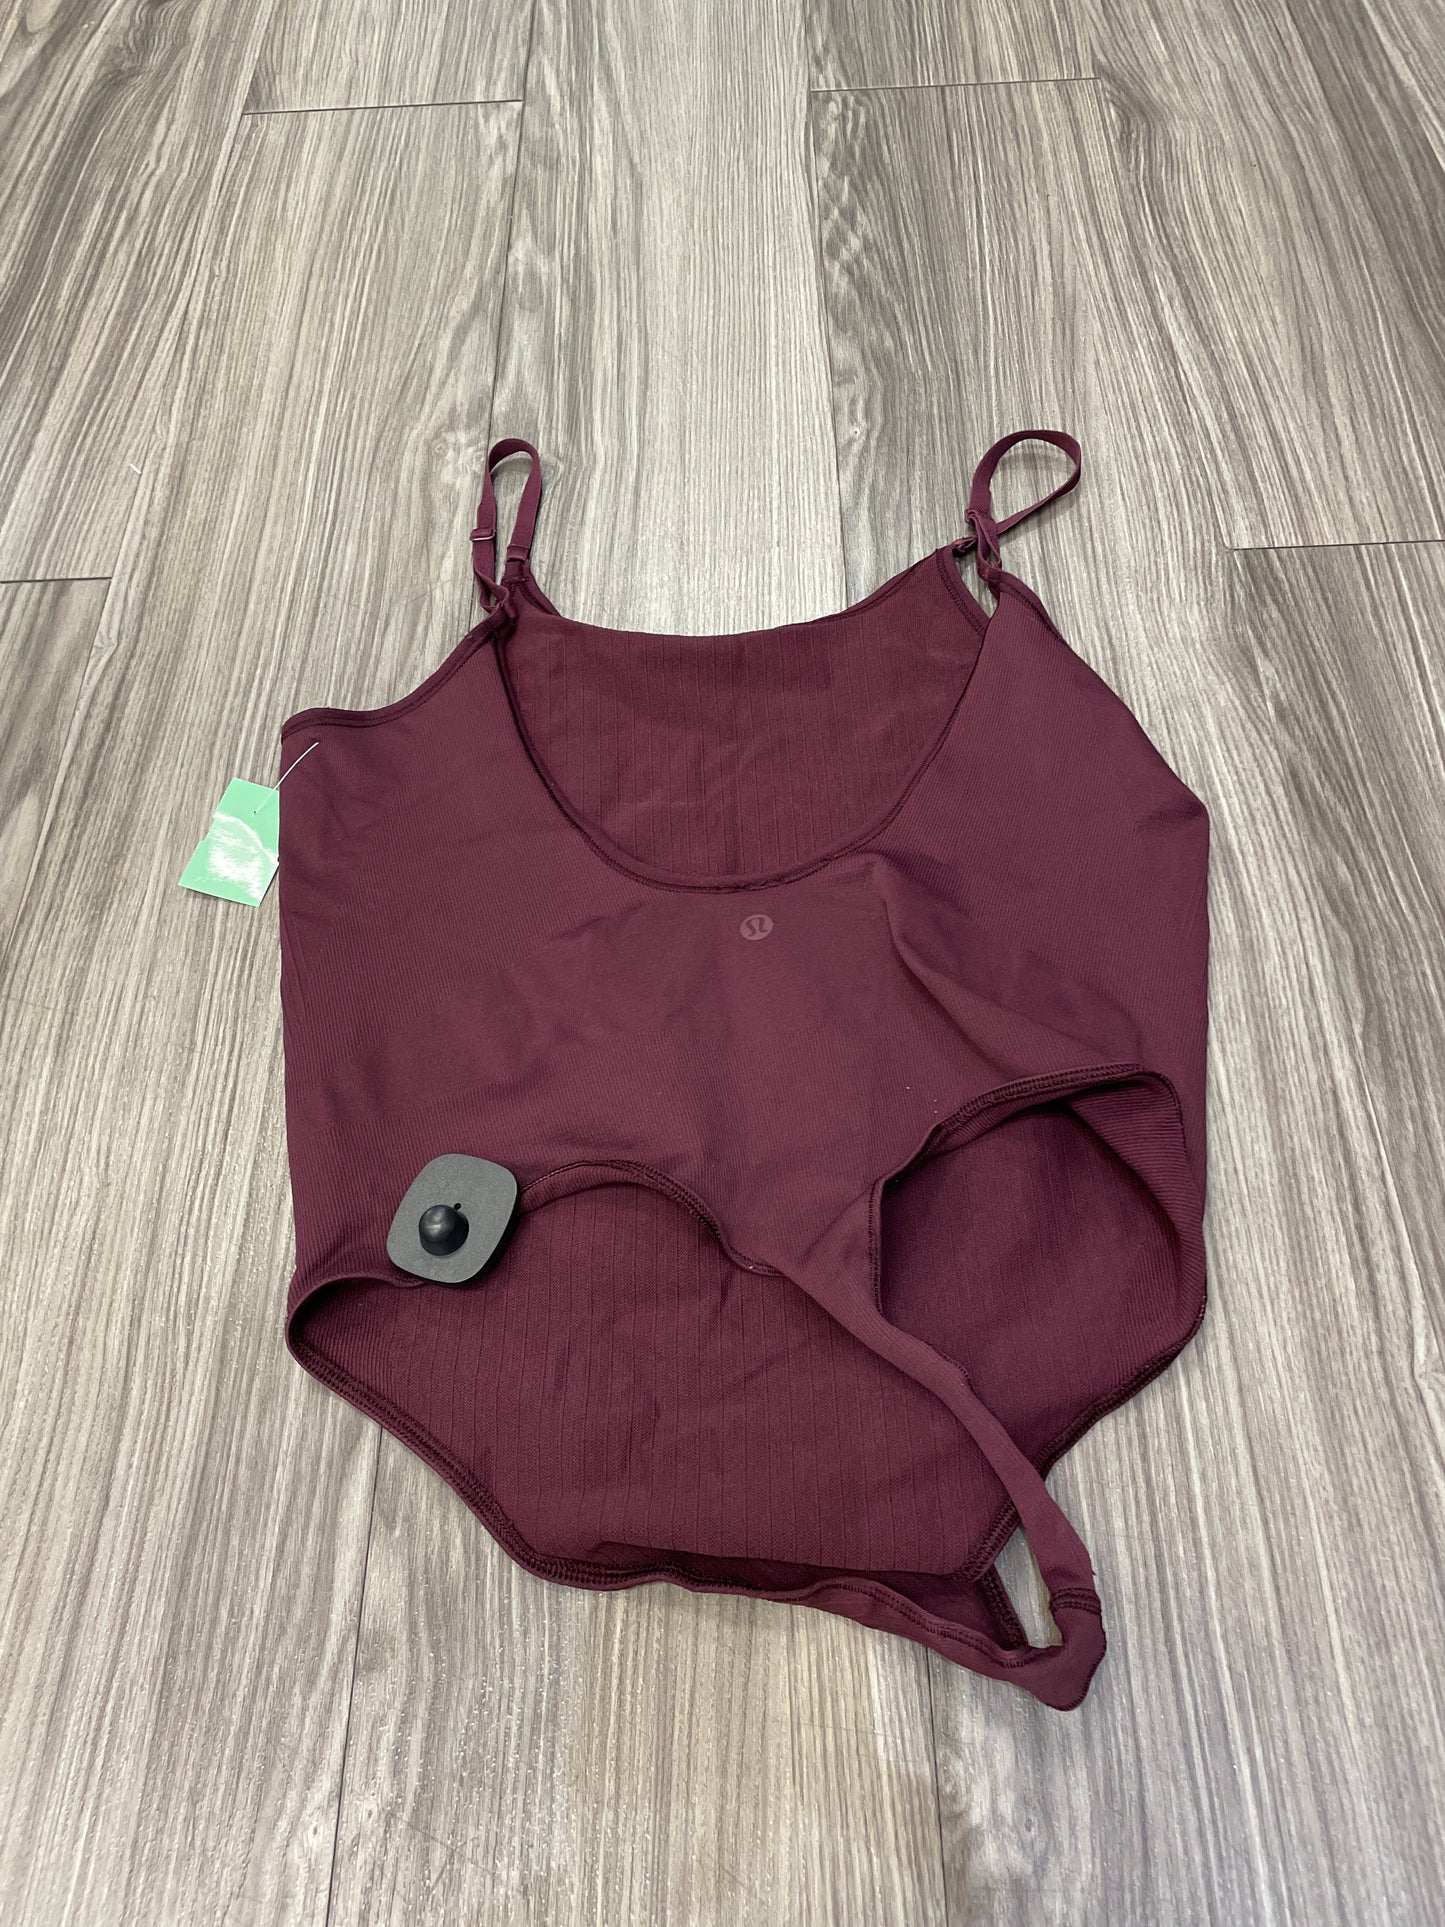 Purple Bodysuit Lululemon, Size L